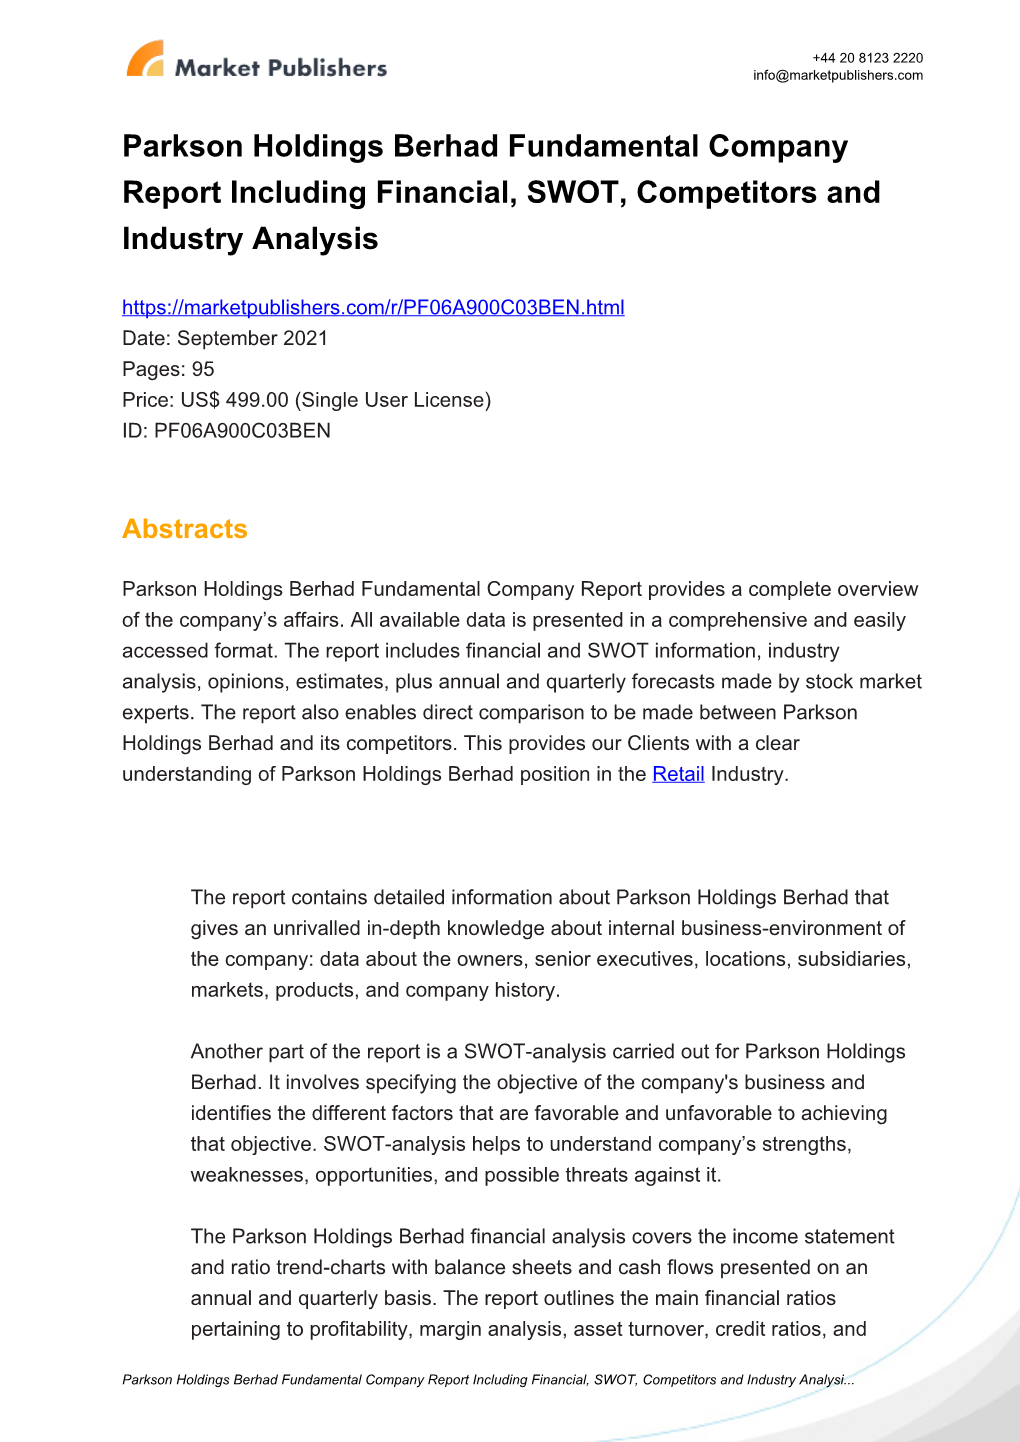 Parkson Holdings Berhad Fundamental Company Report